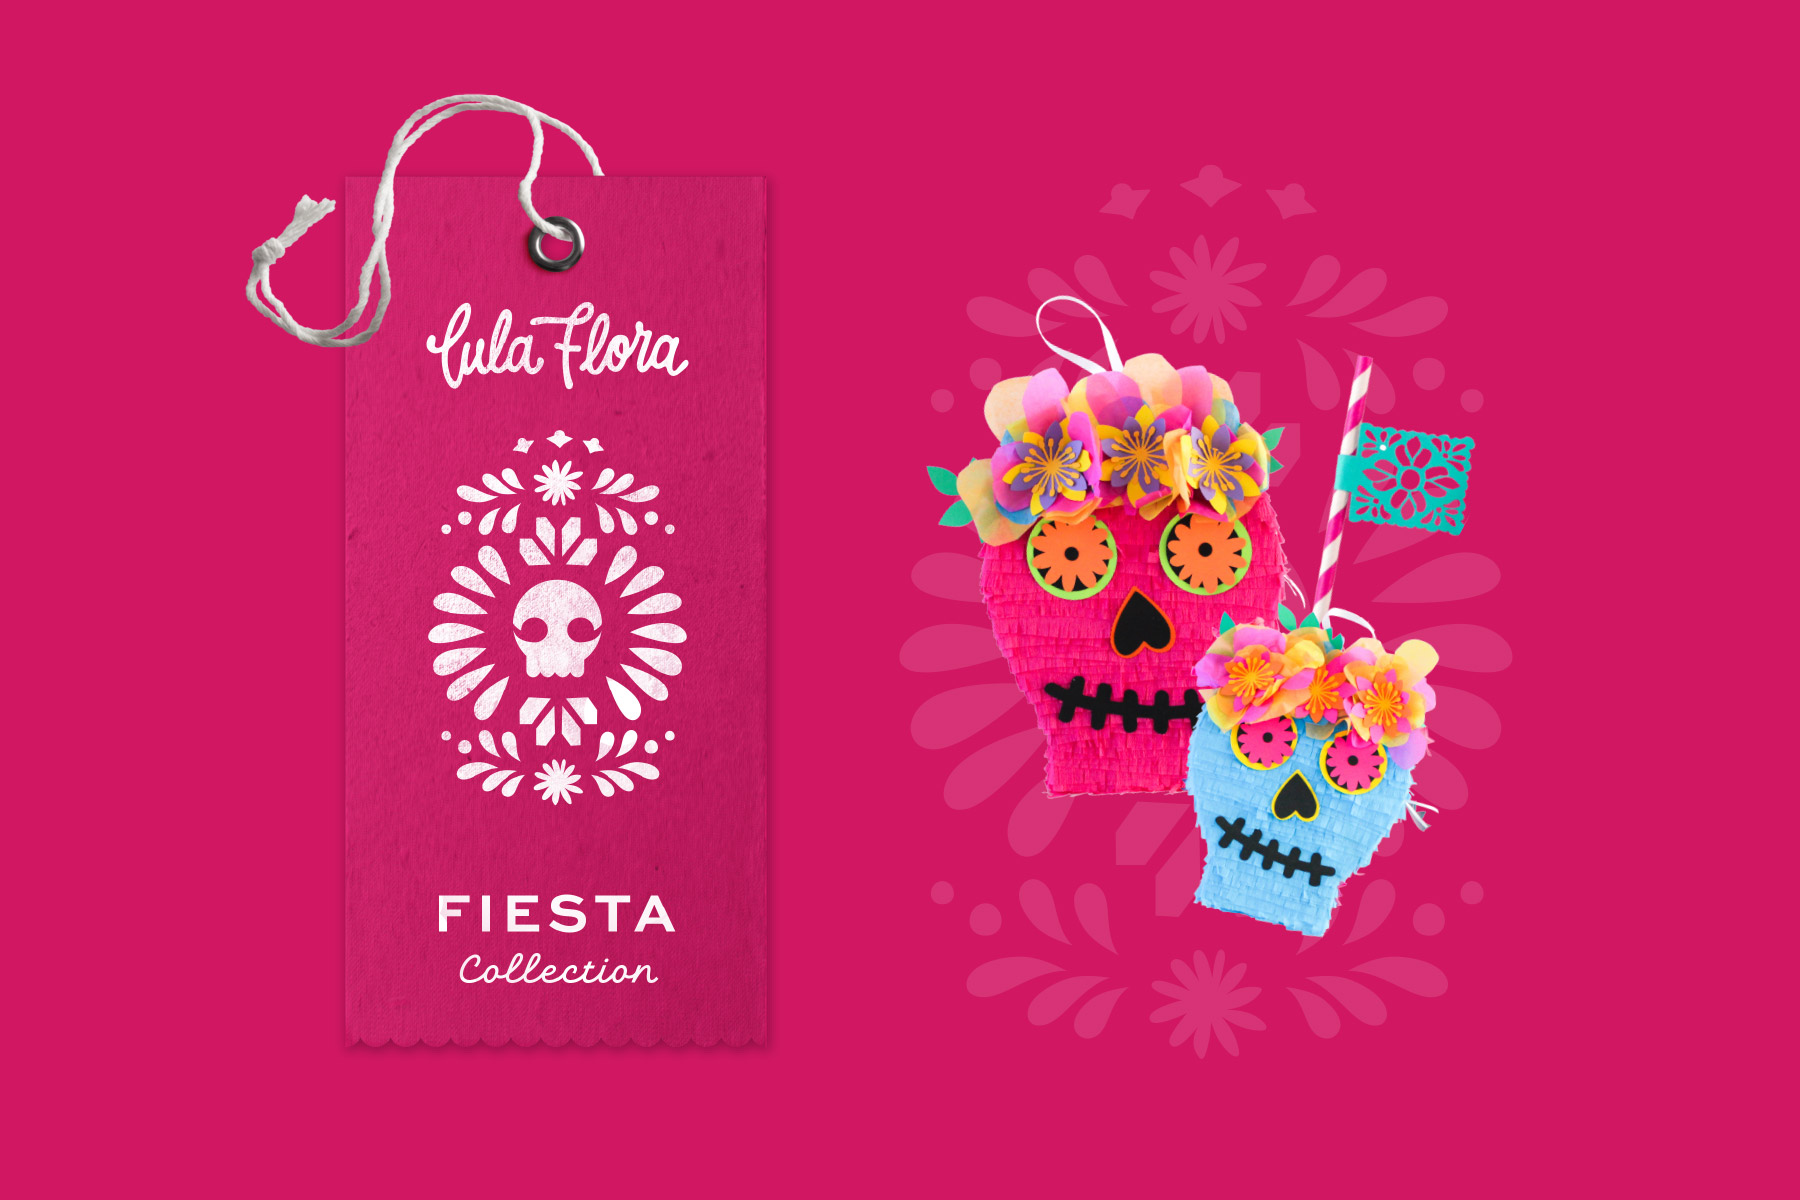 Calavera miniature piñatas wearing flower crowns and a product hang tag